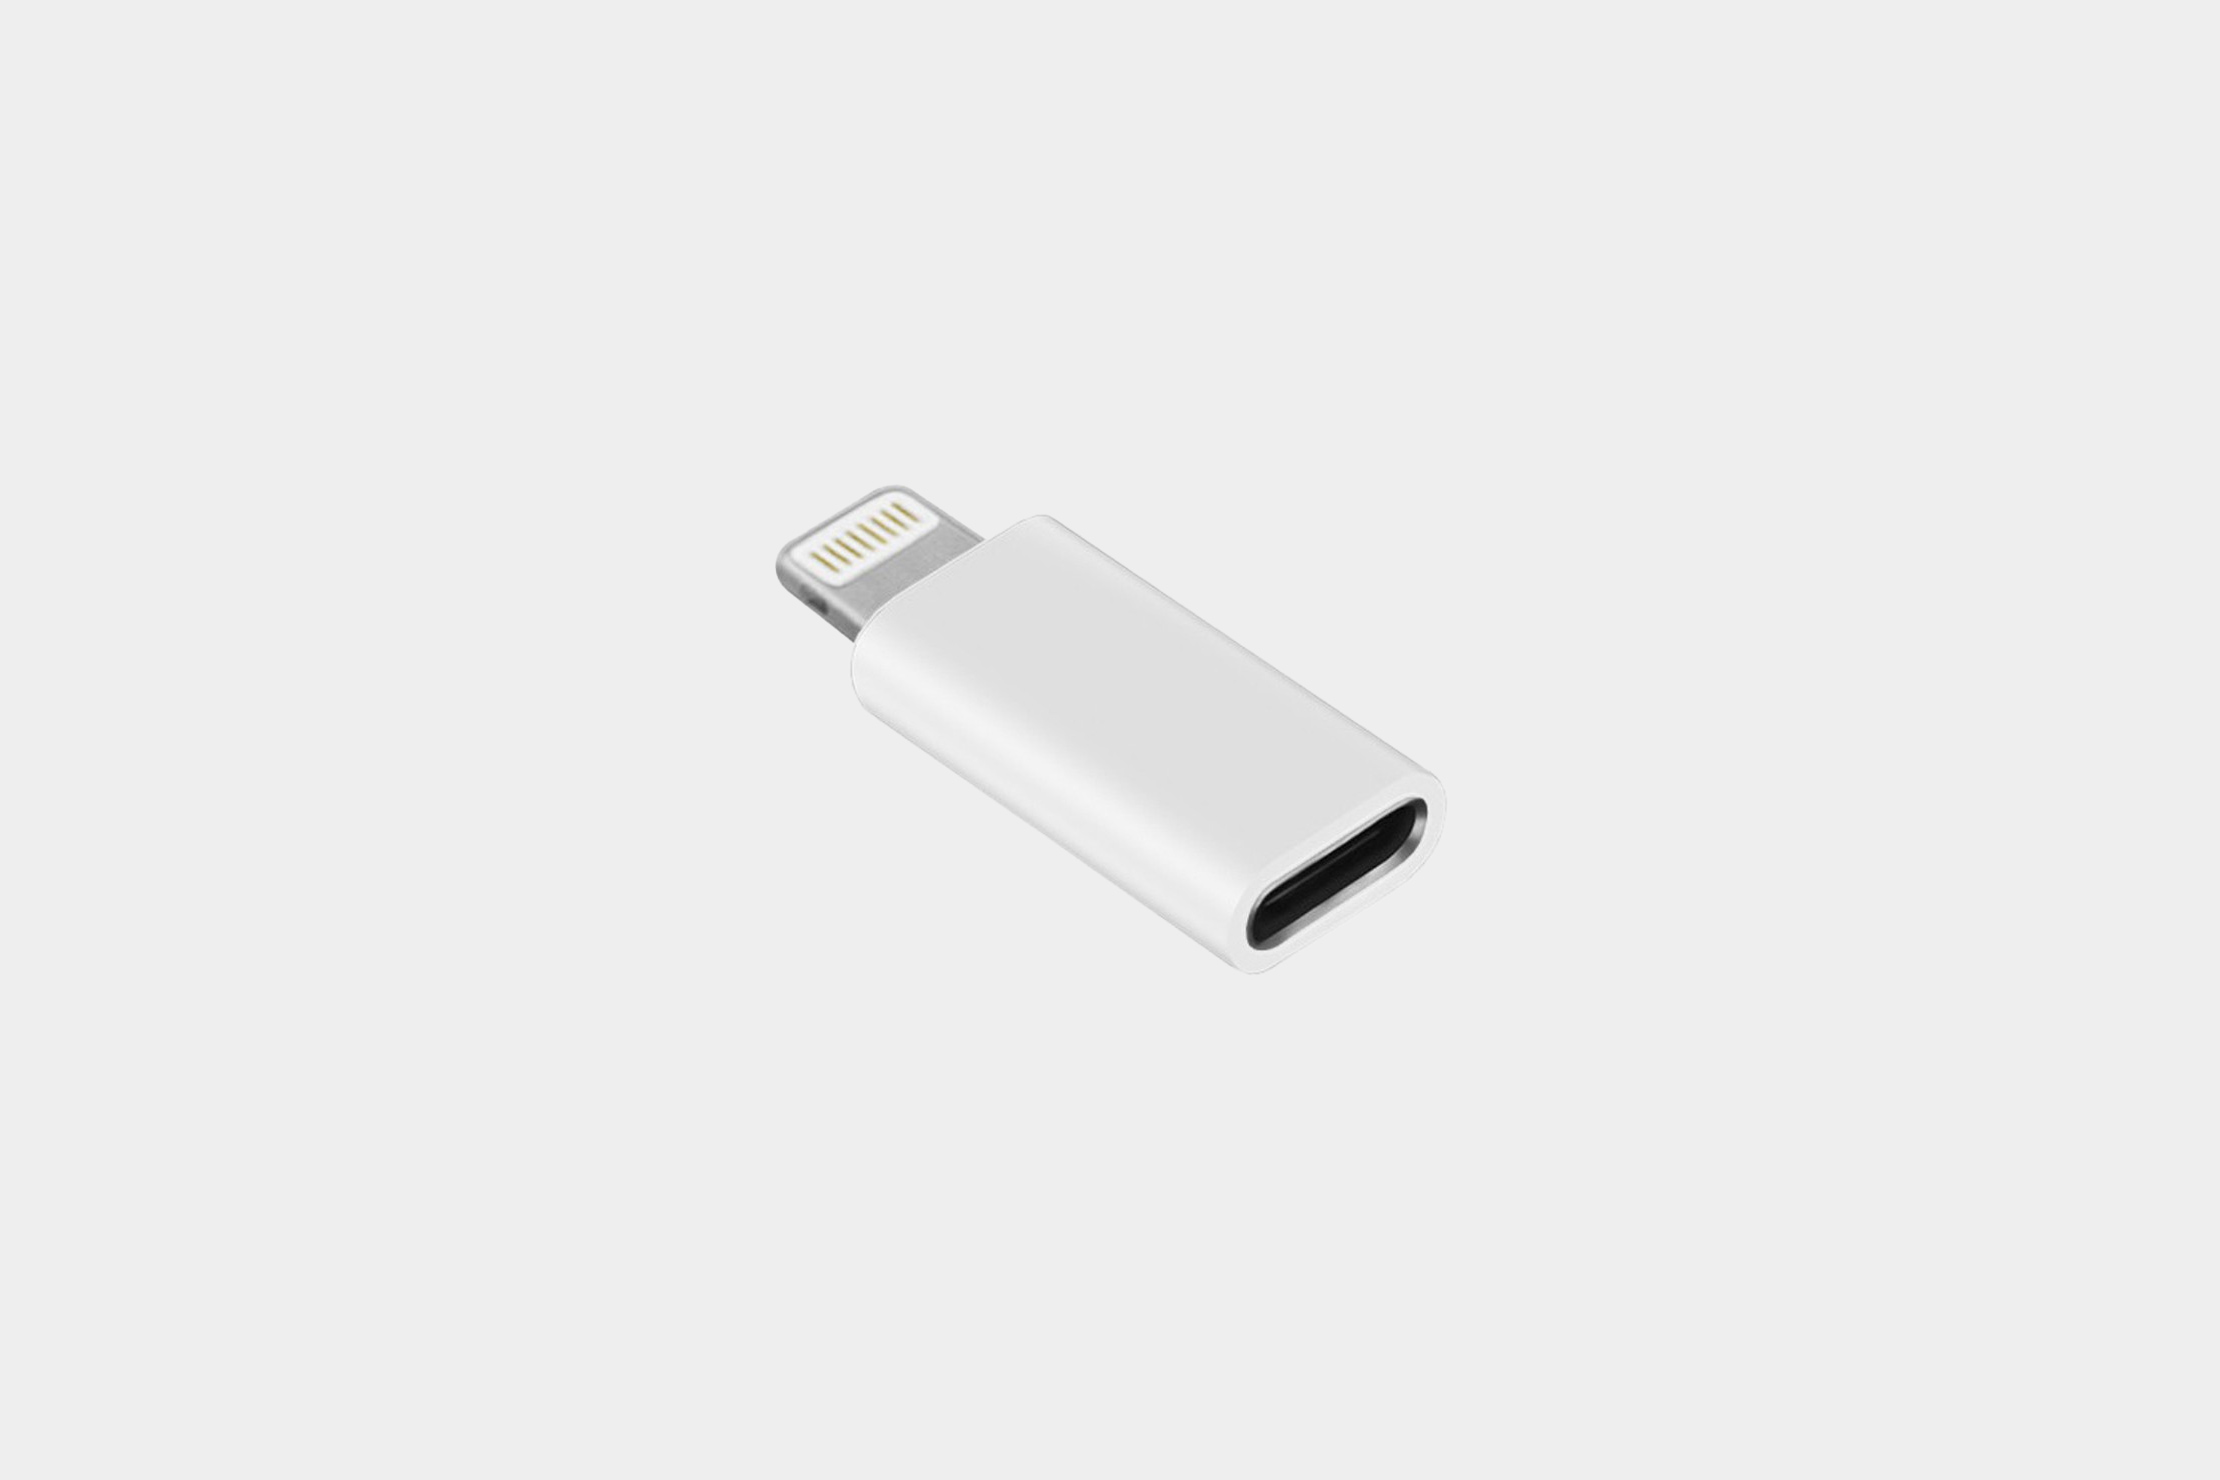 Standard Lightning to USB Type-C Adapter